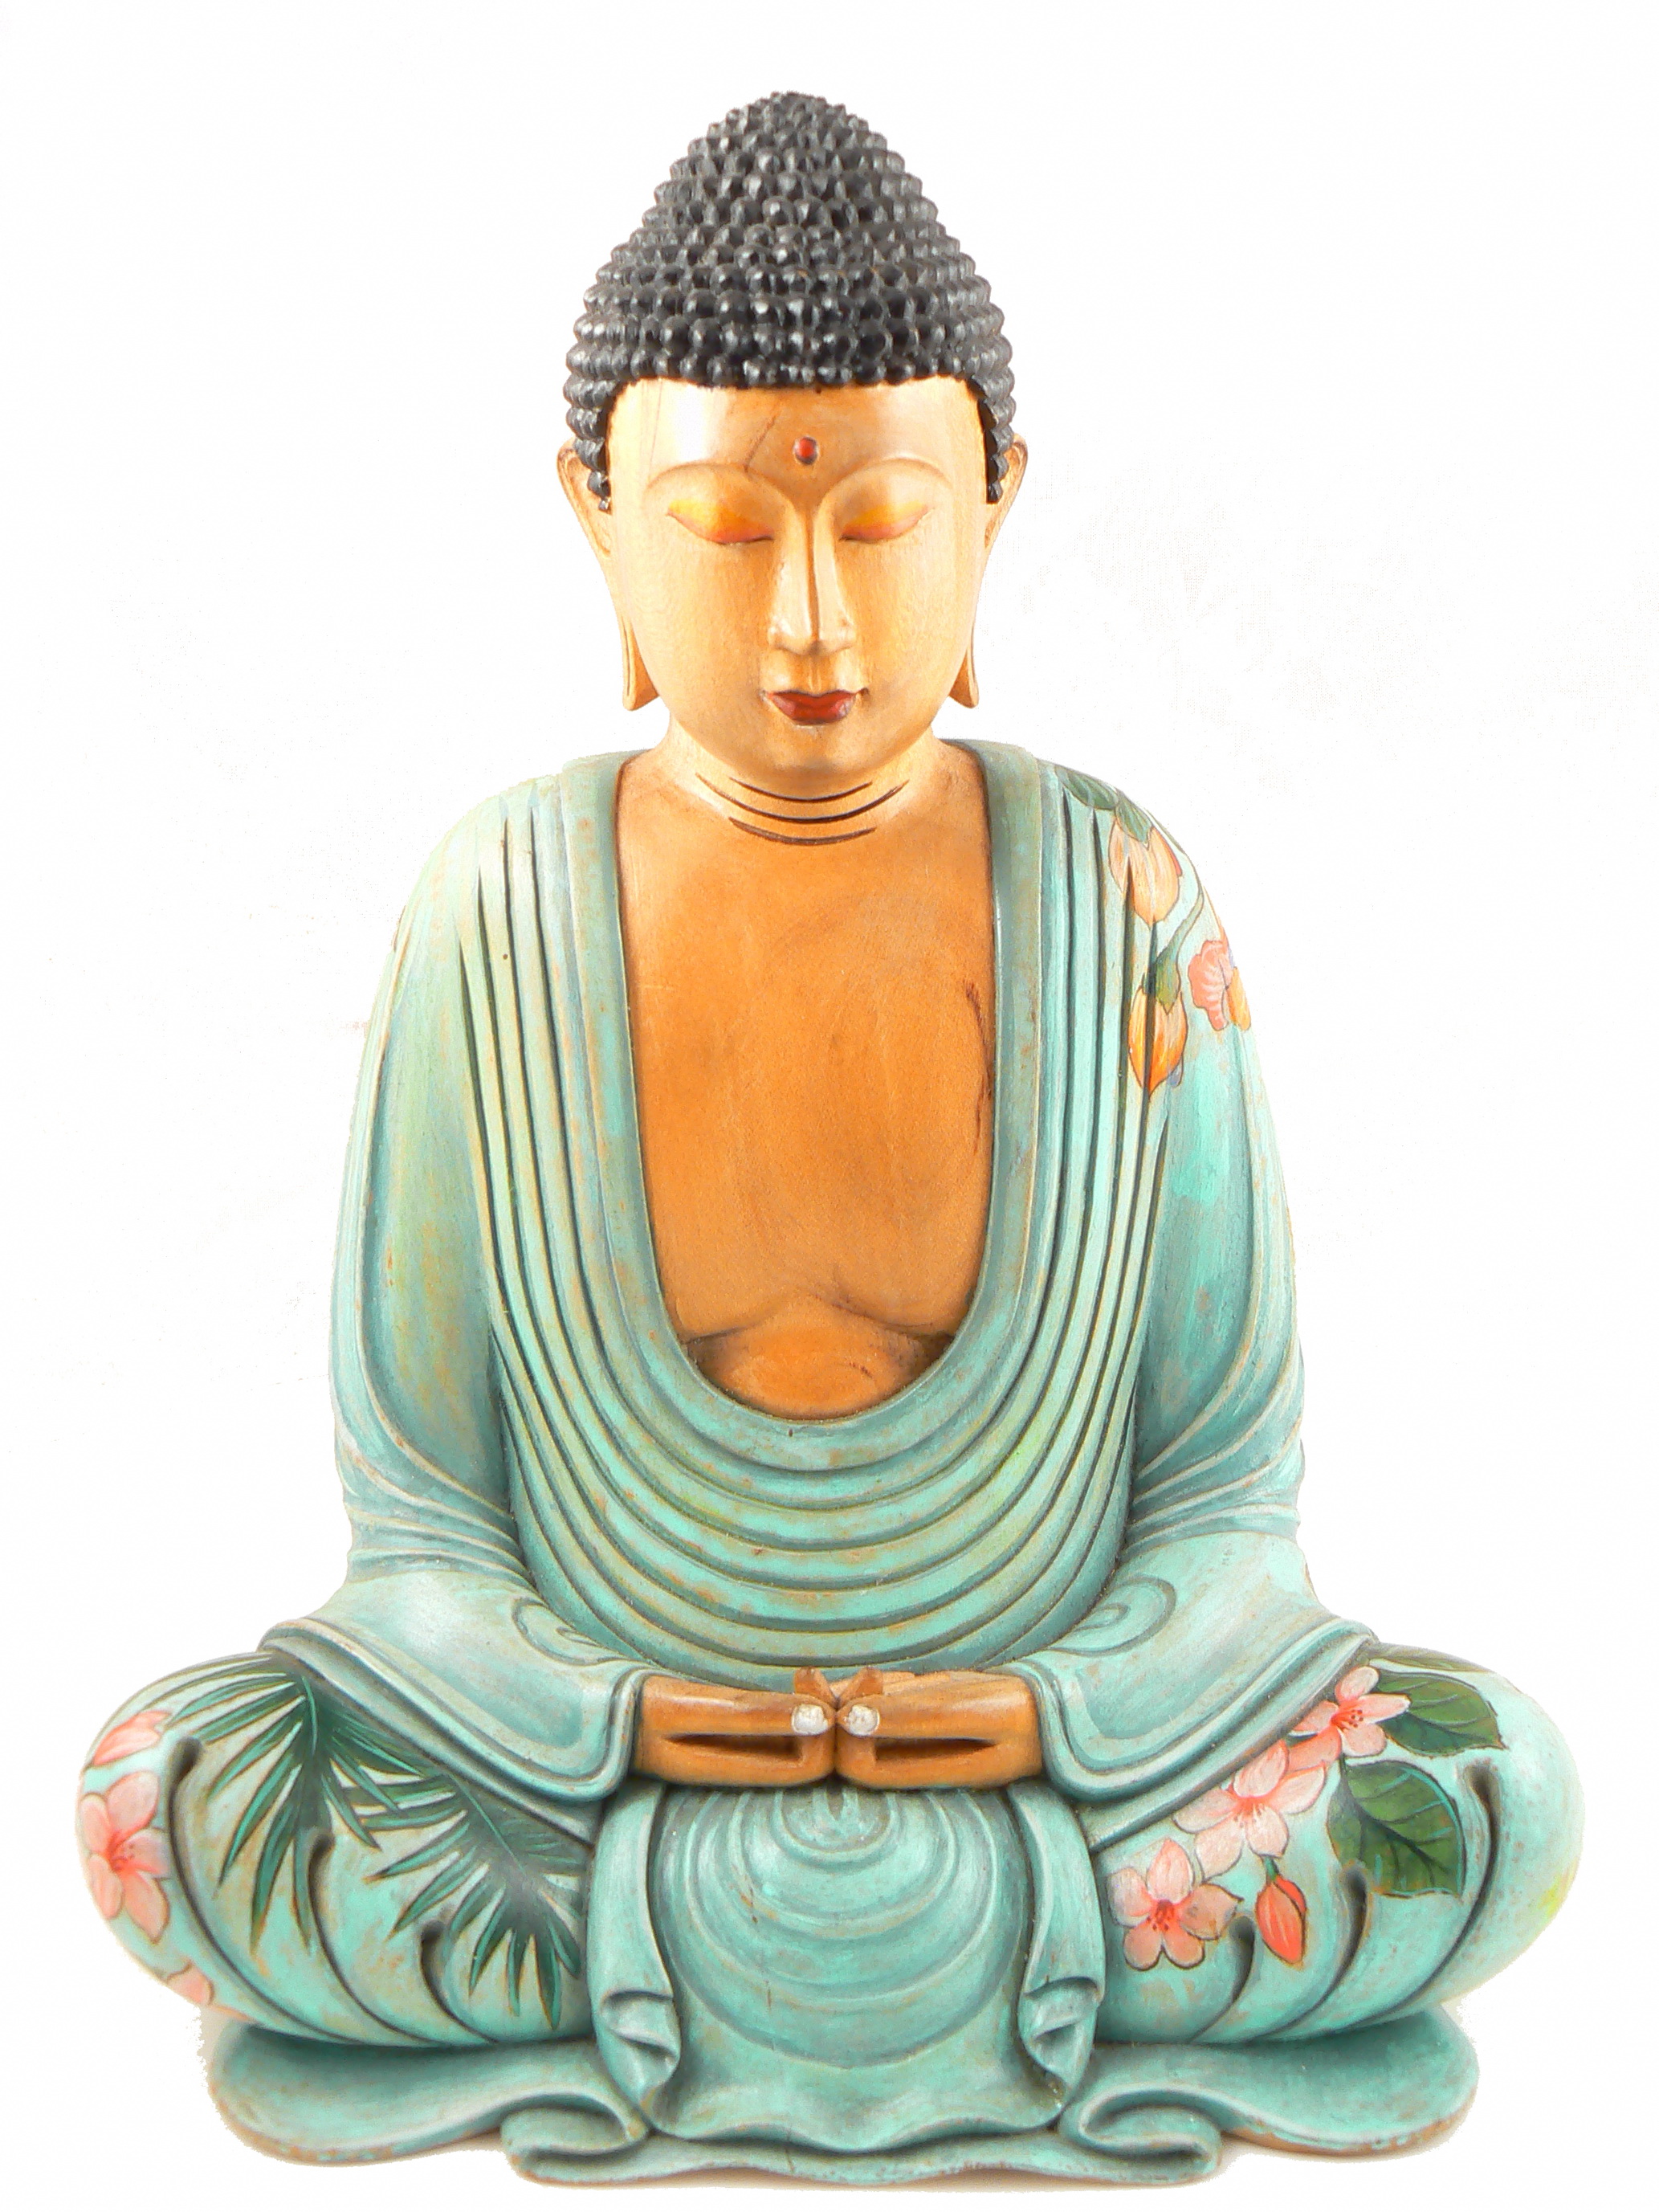 The Four Metaphors of the Buddha